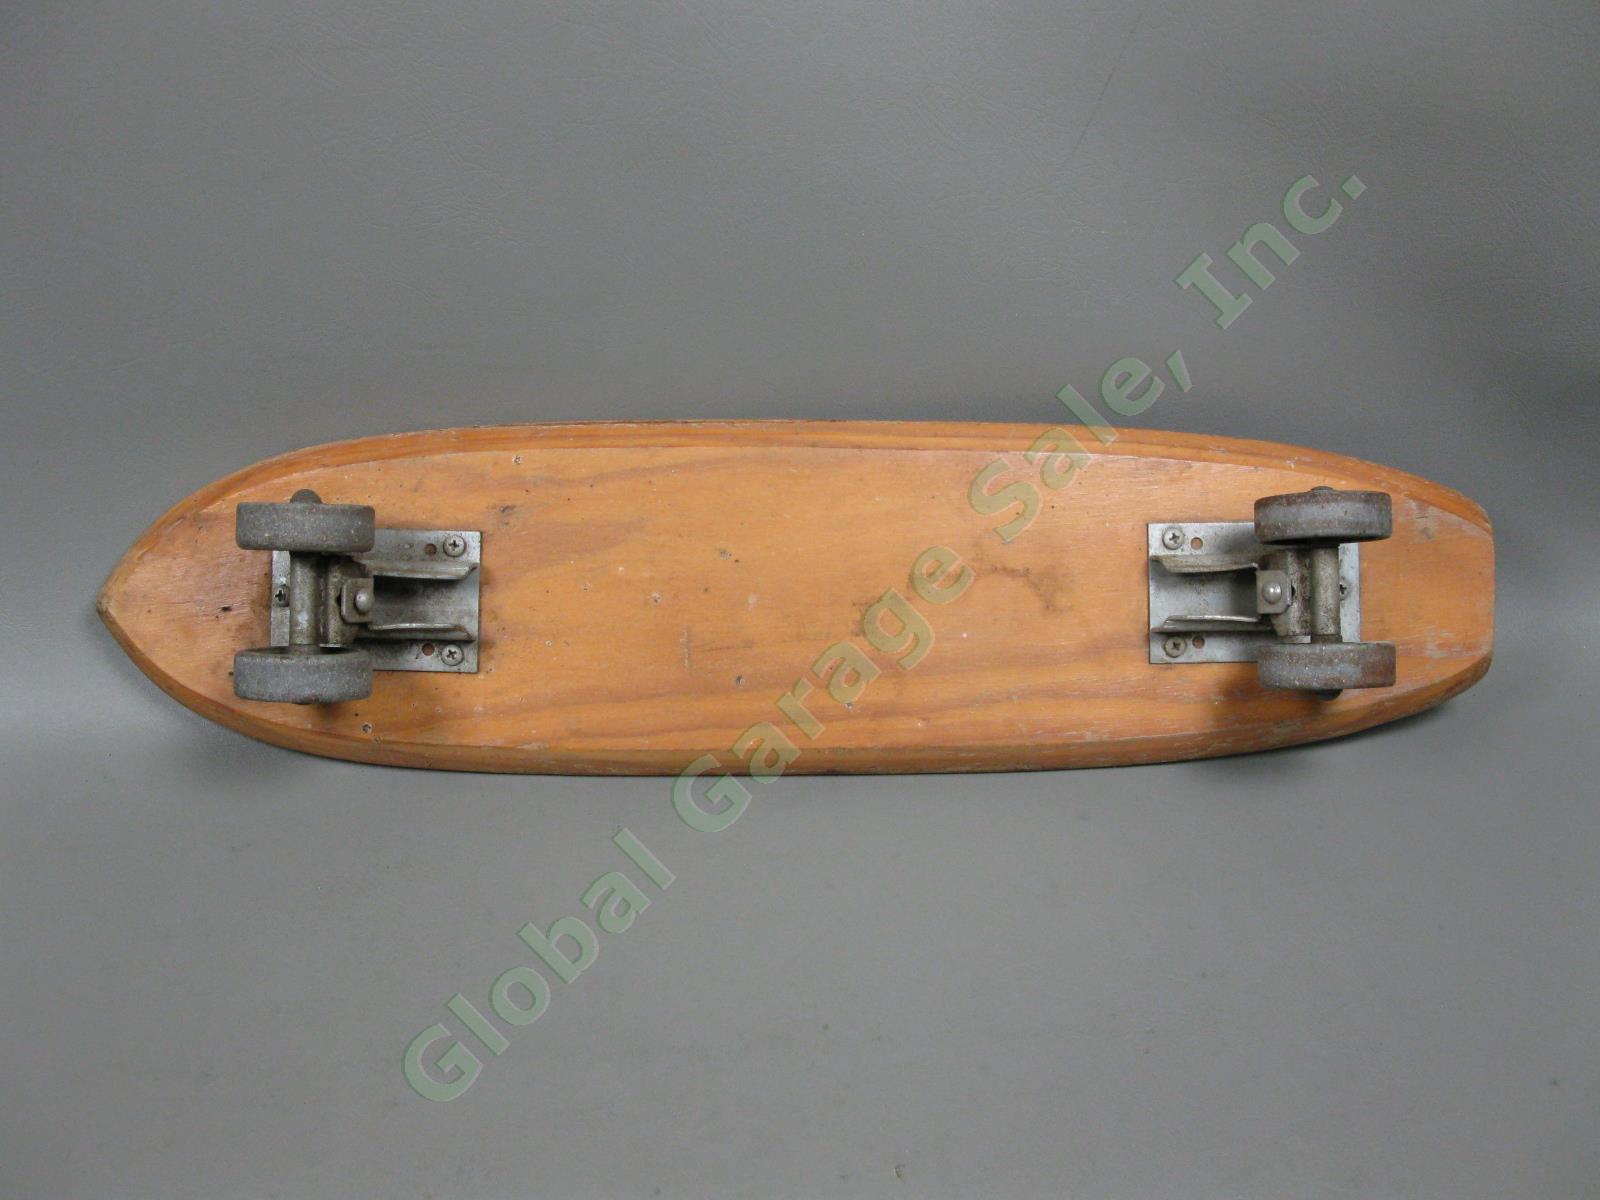 Vtg 1960s Blue Shark Sidewalk Nash Surfboard 22" Wooden Skateboard Metal Wheels 1